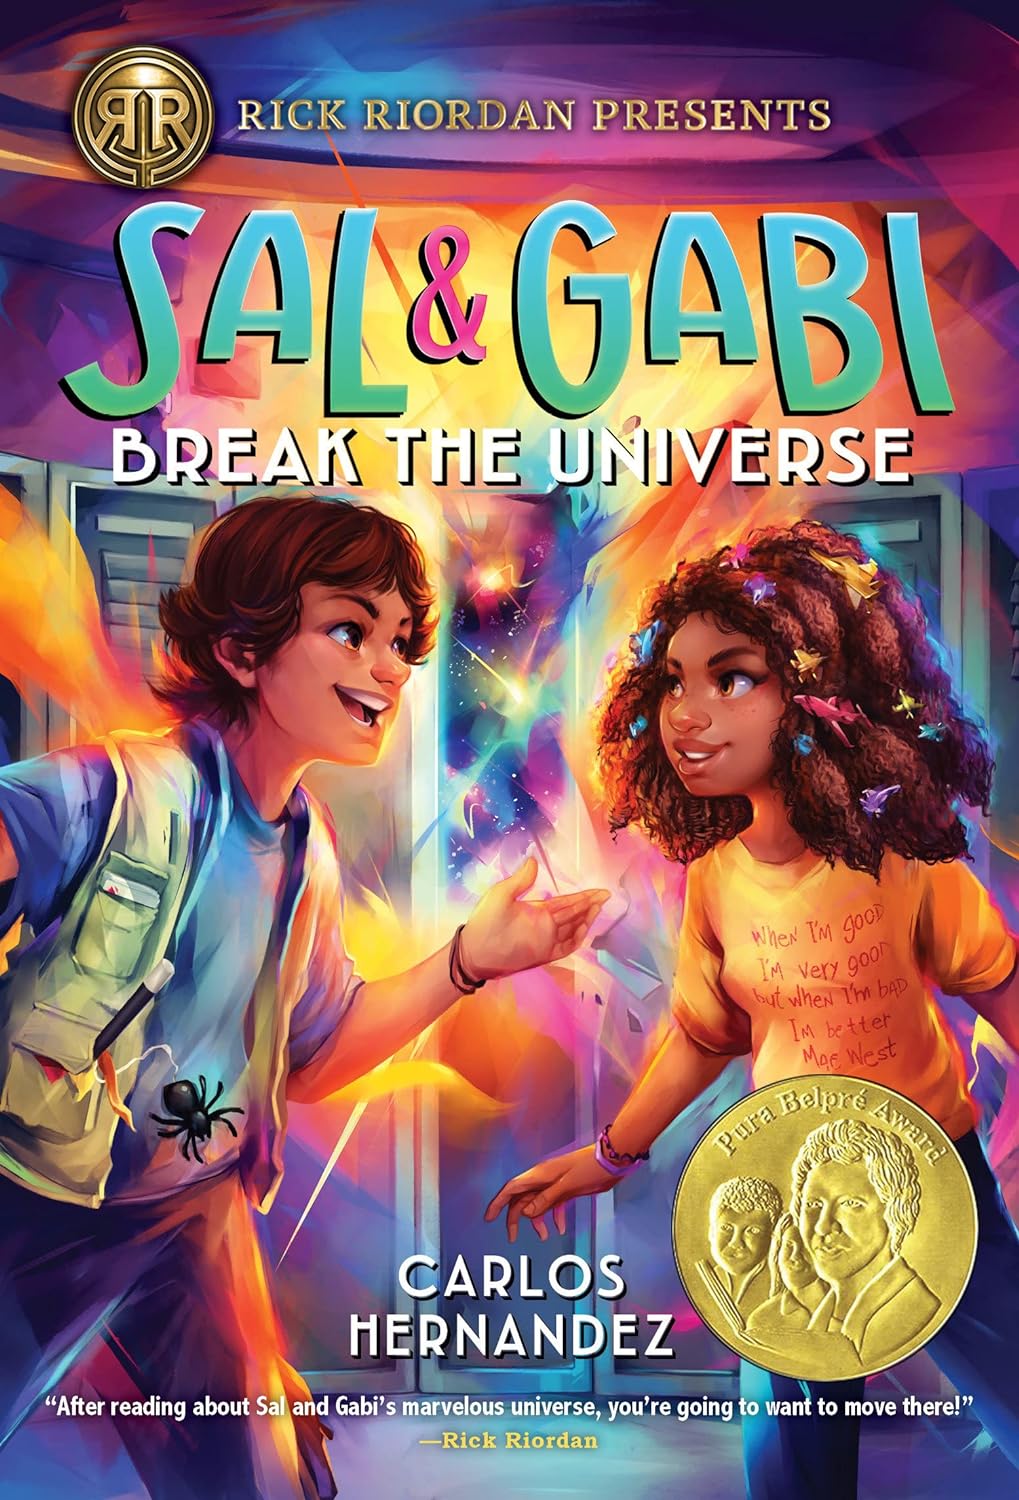 Image of "Sal and Gabi Break The Universe"